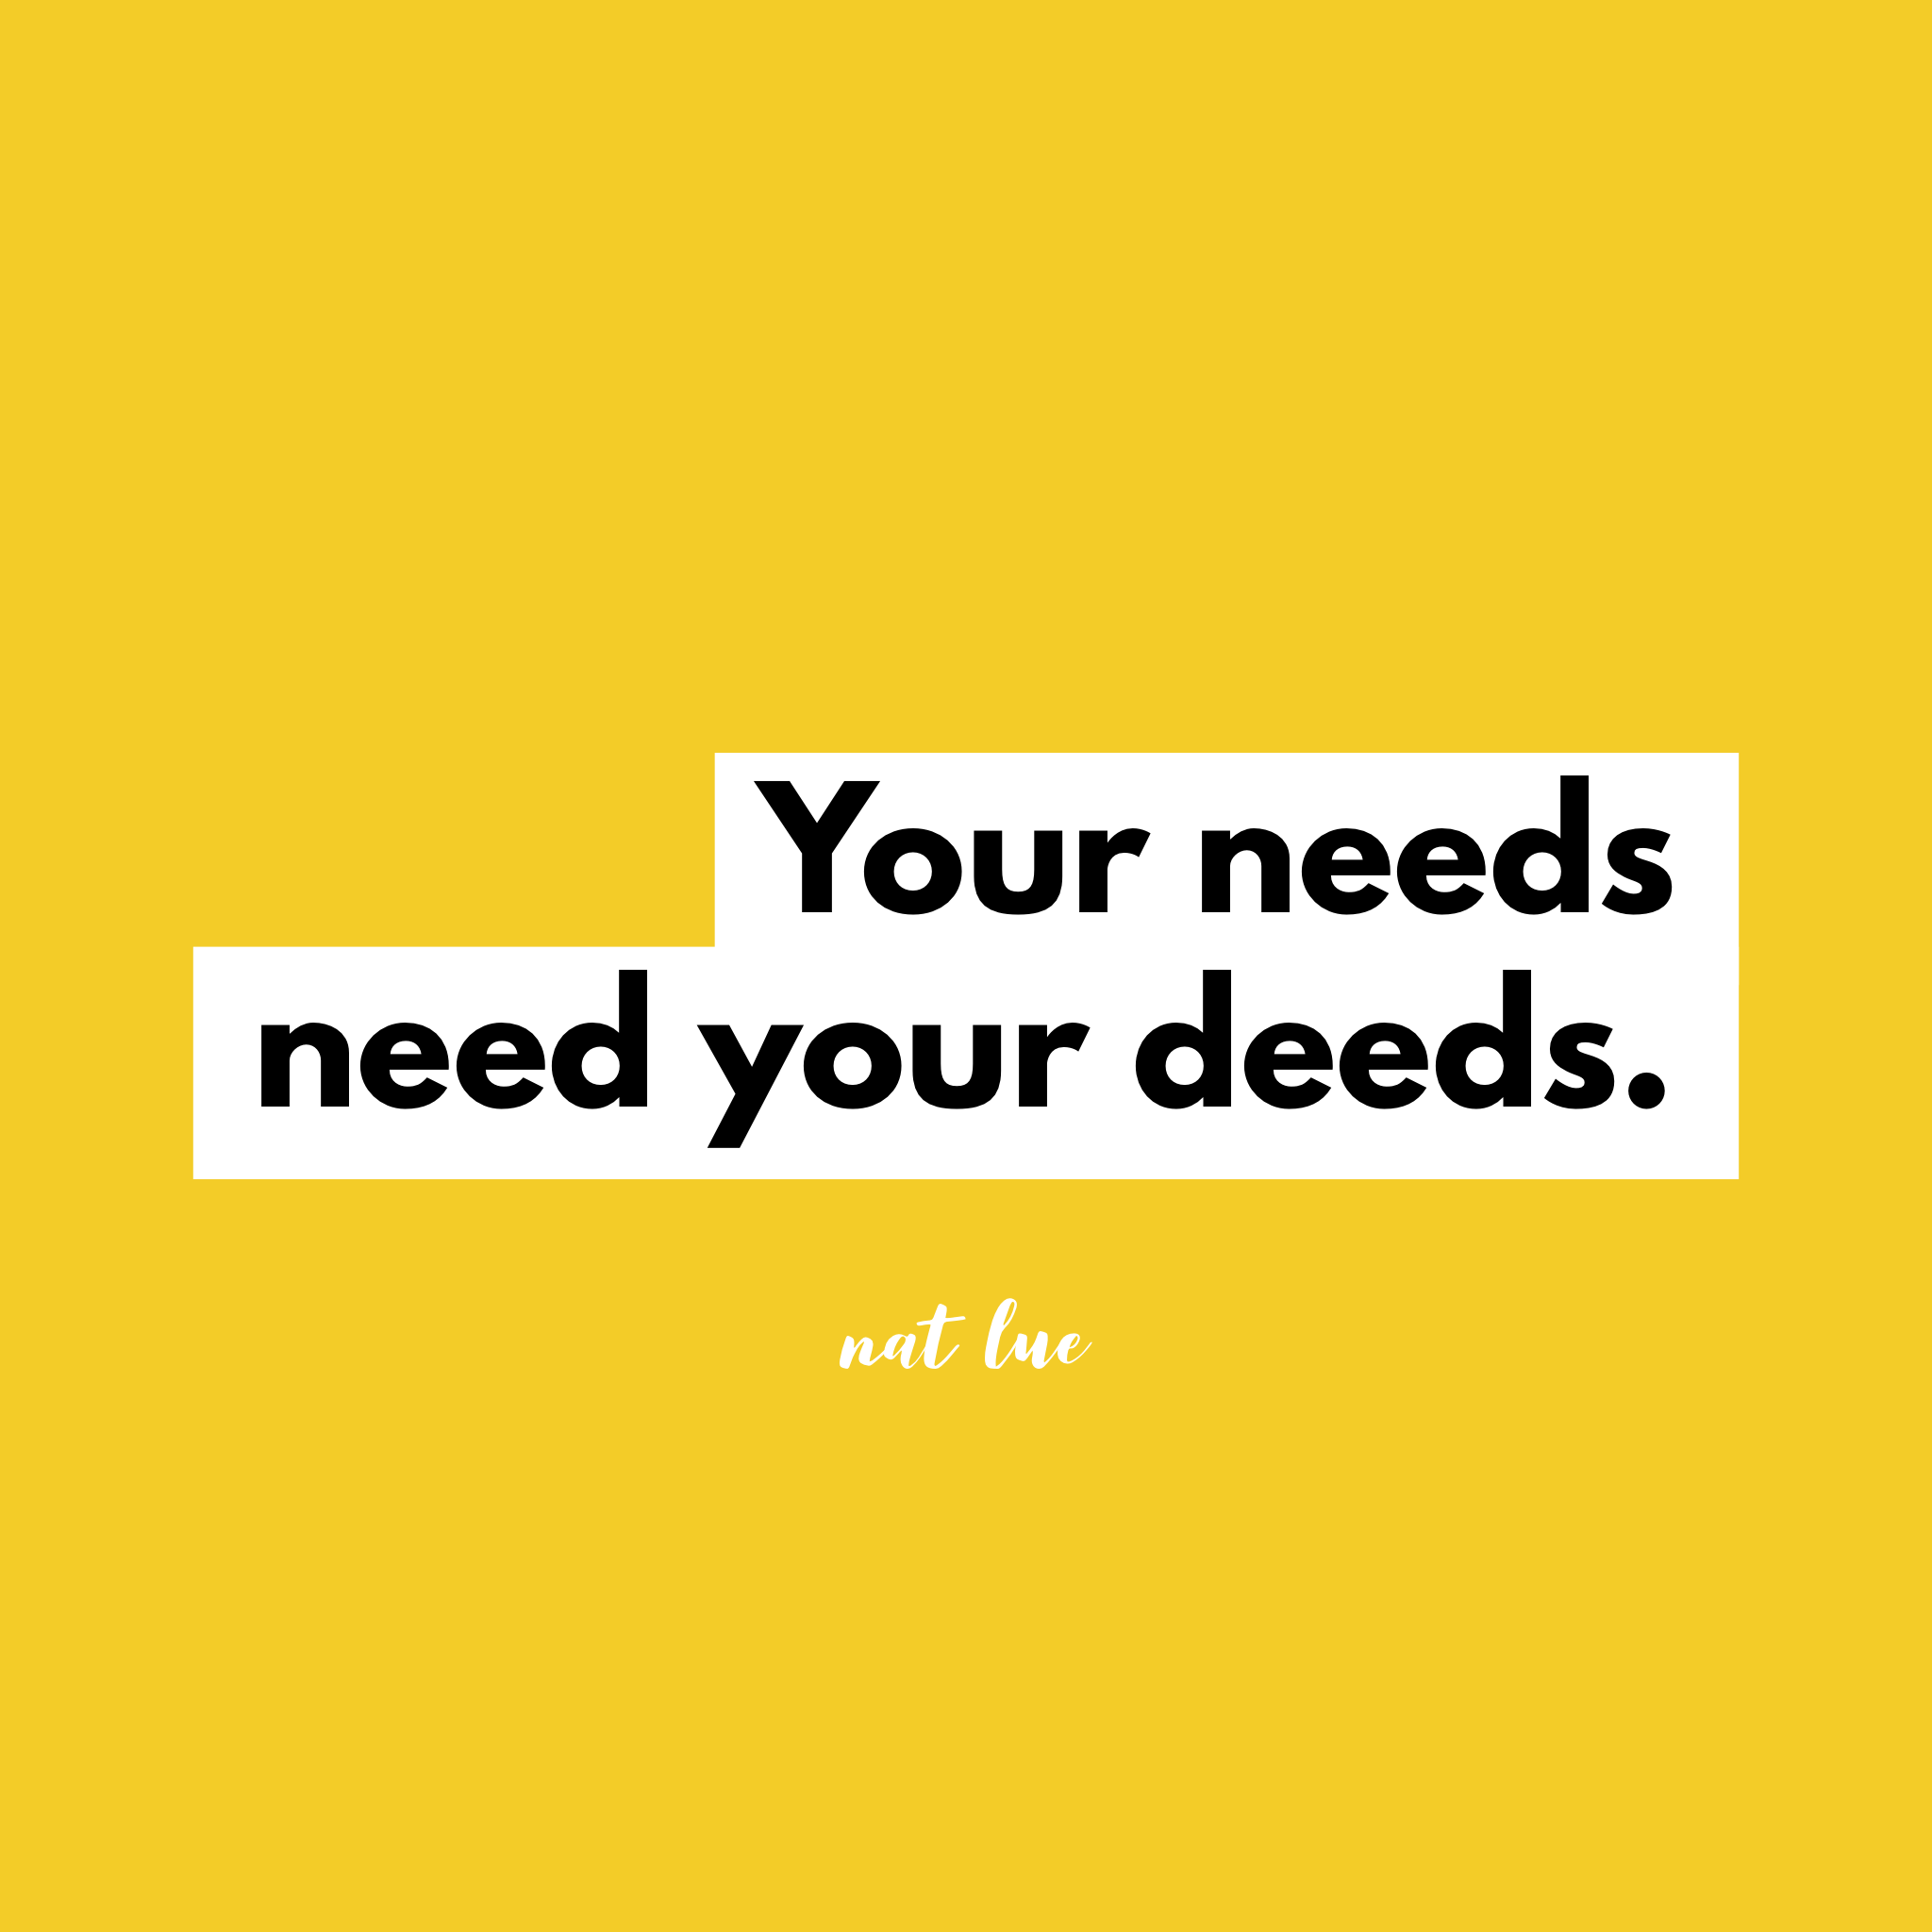 "Your needs need your deeds". Understanding needs and the 5 love languages